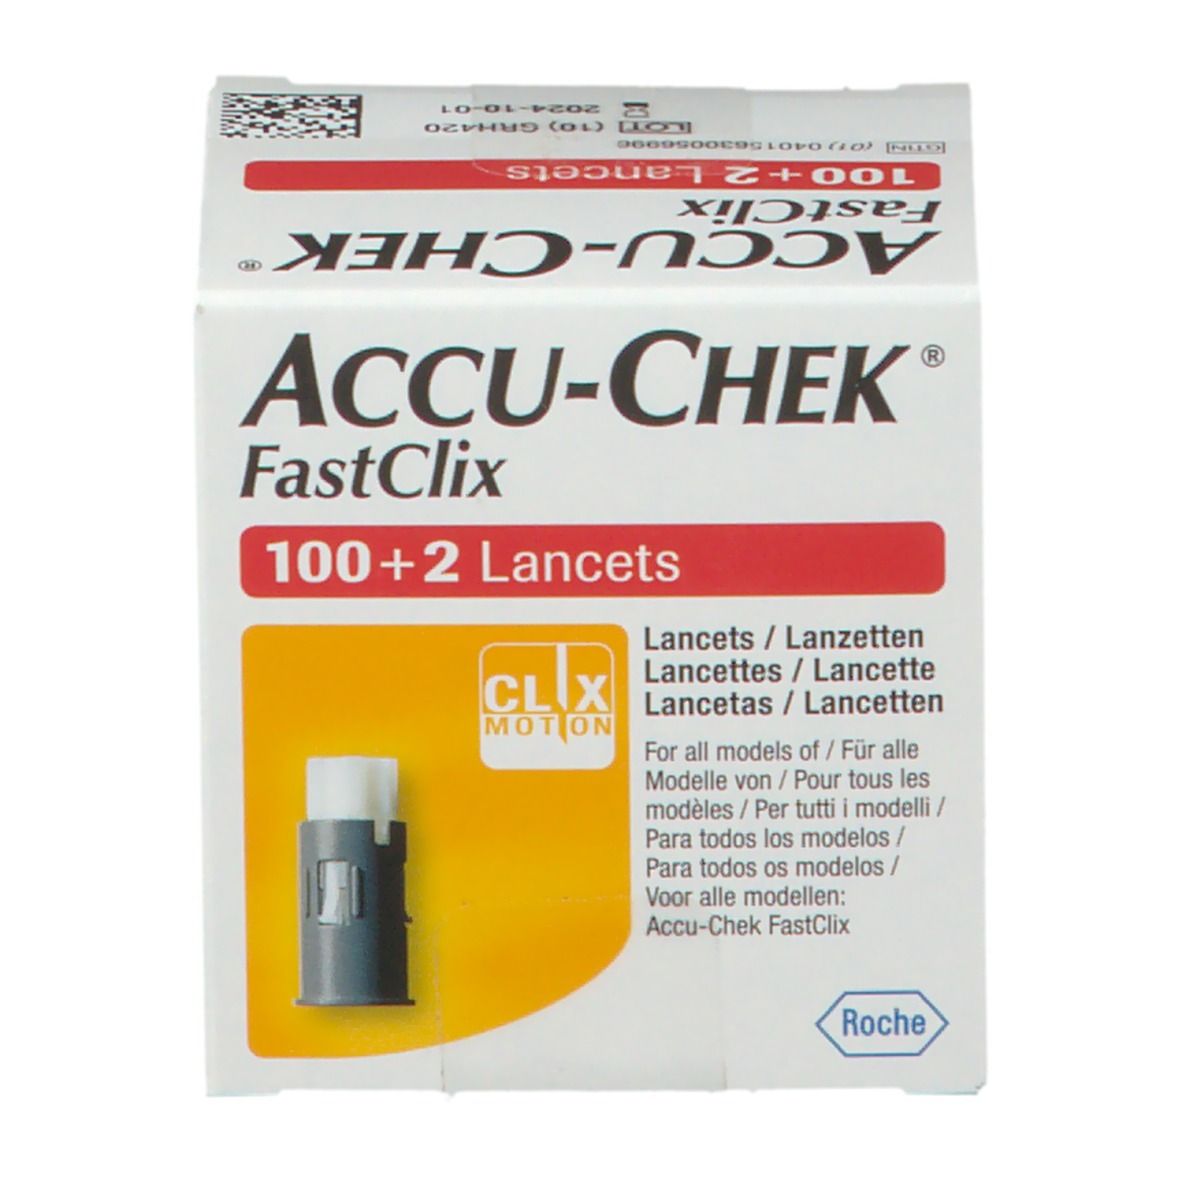 Accu-Chek® FastClix Lancette